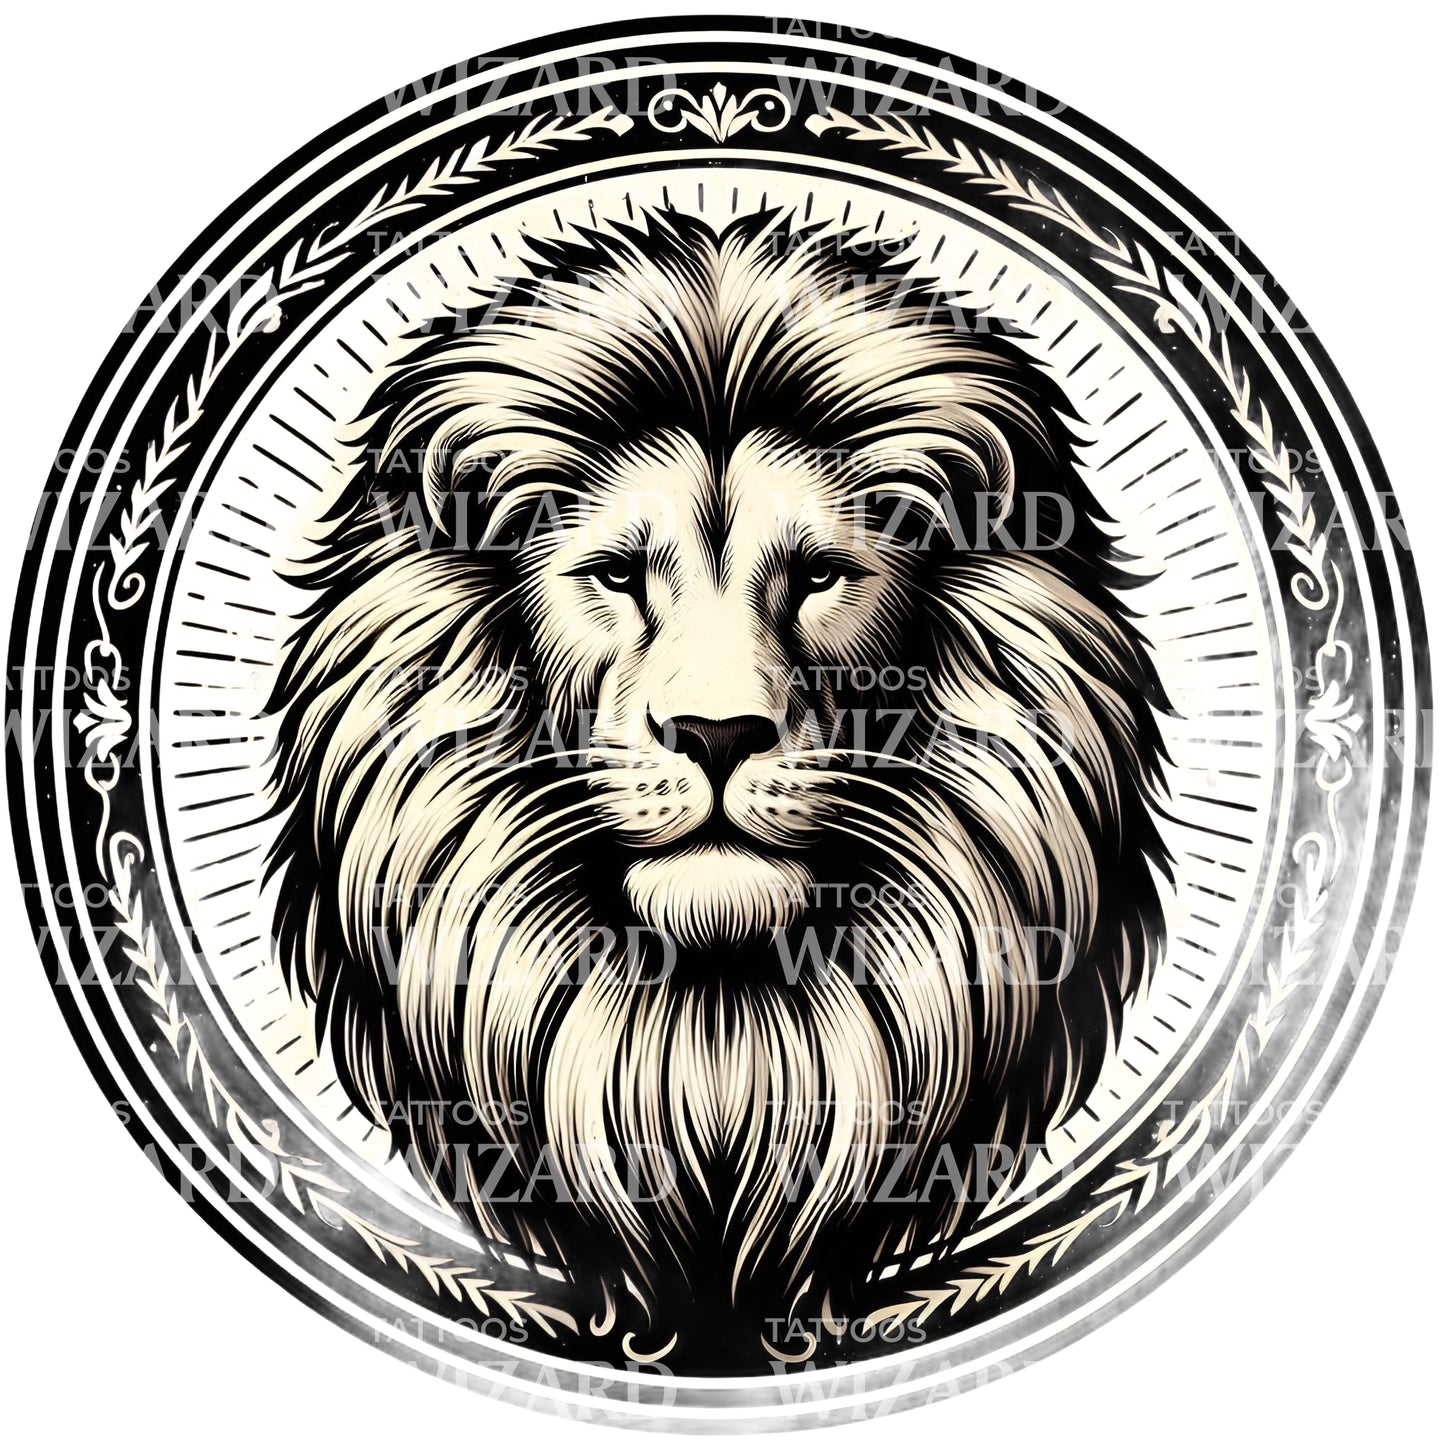 Lion In Showcase Tattoo Idea